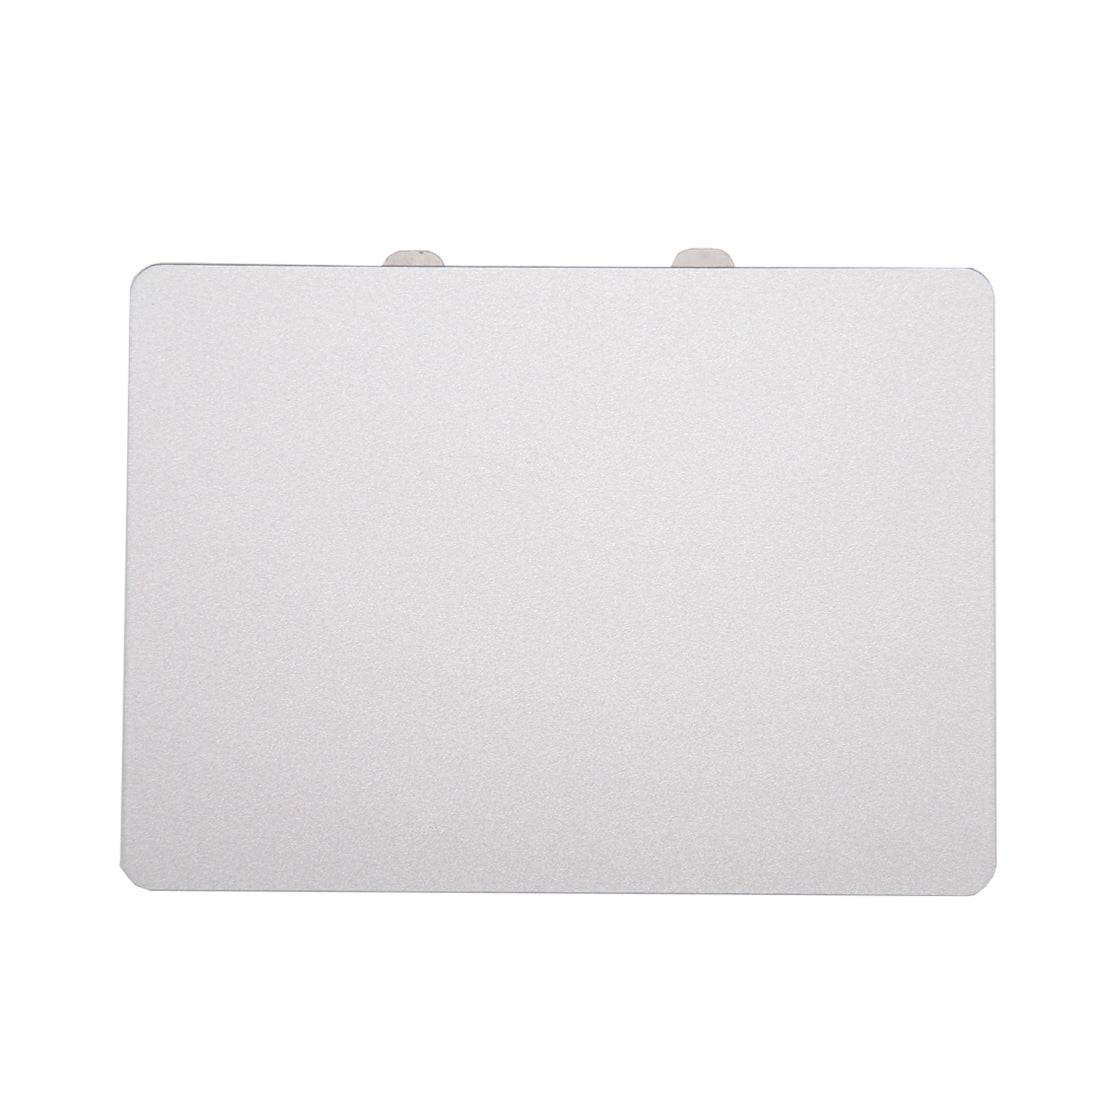 Panel Táctil TouchPad Apple MacBook Pro 13.3 A1278 2009 2012